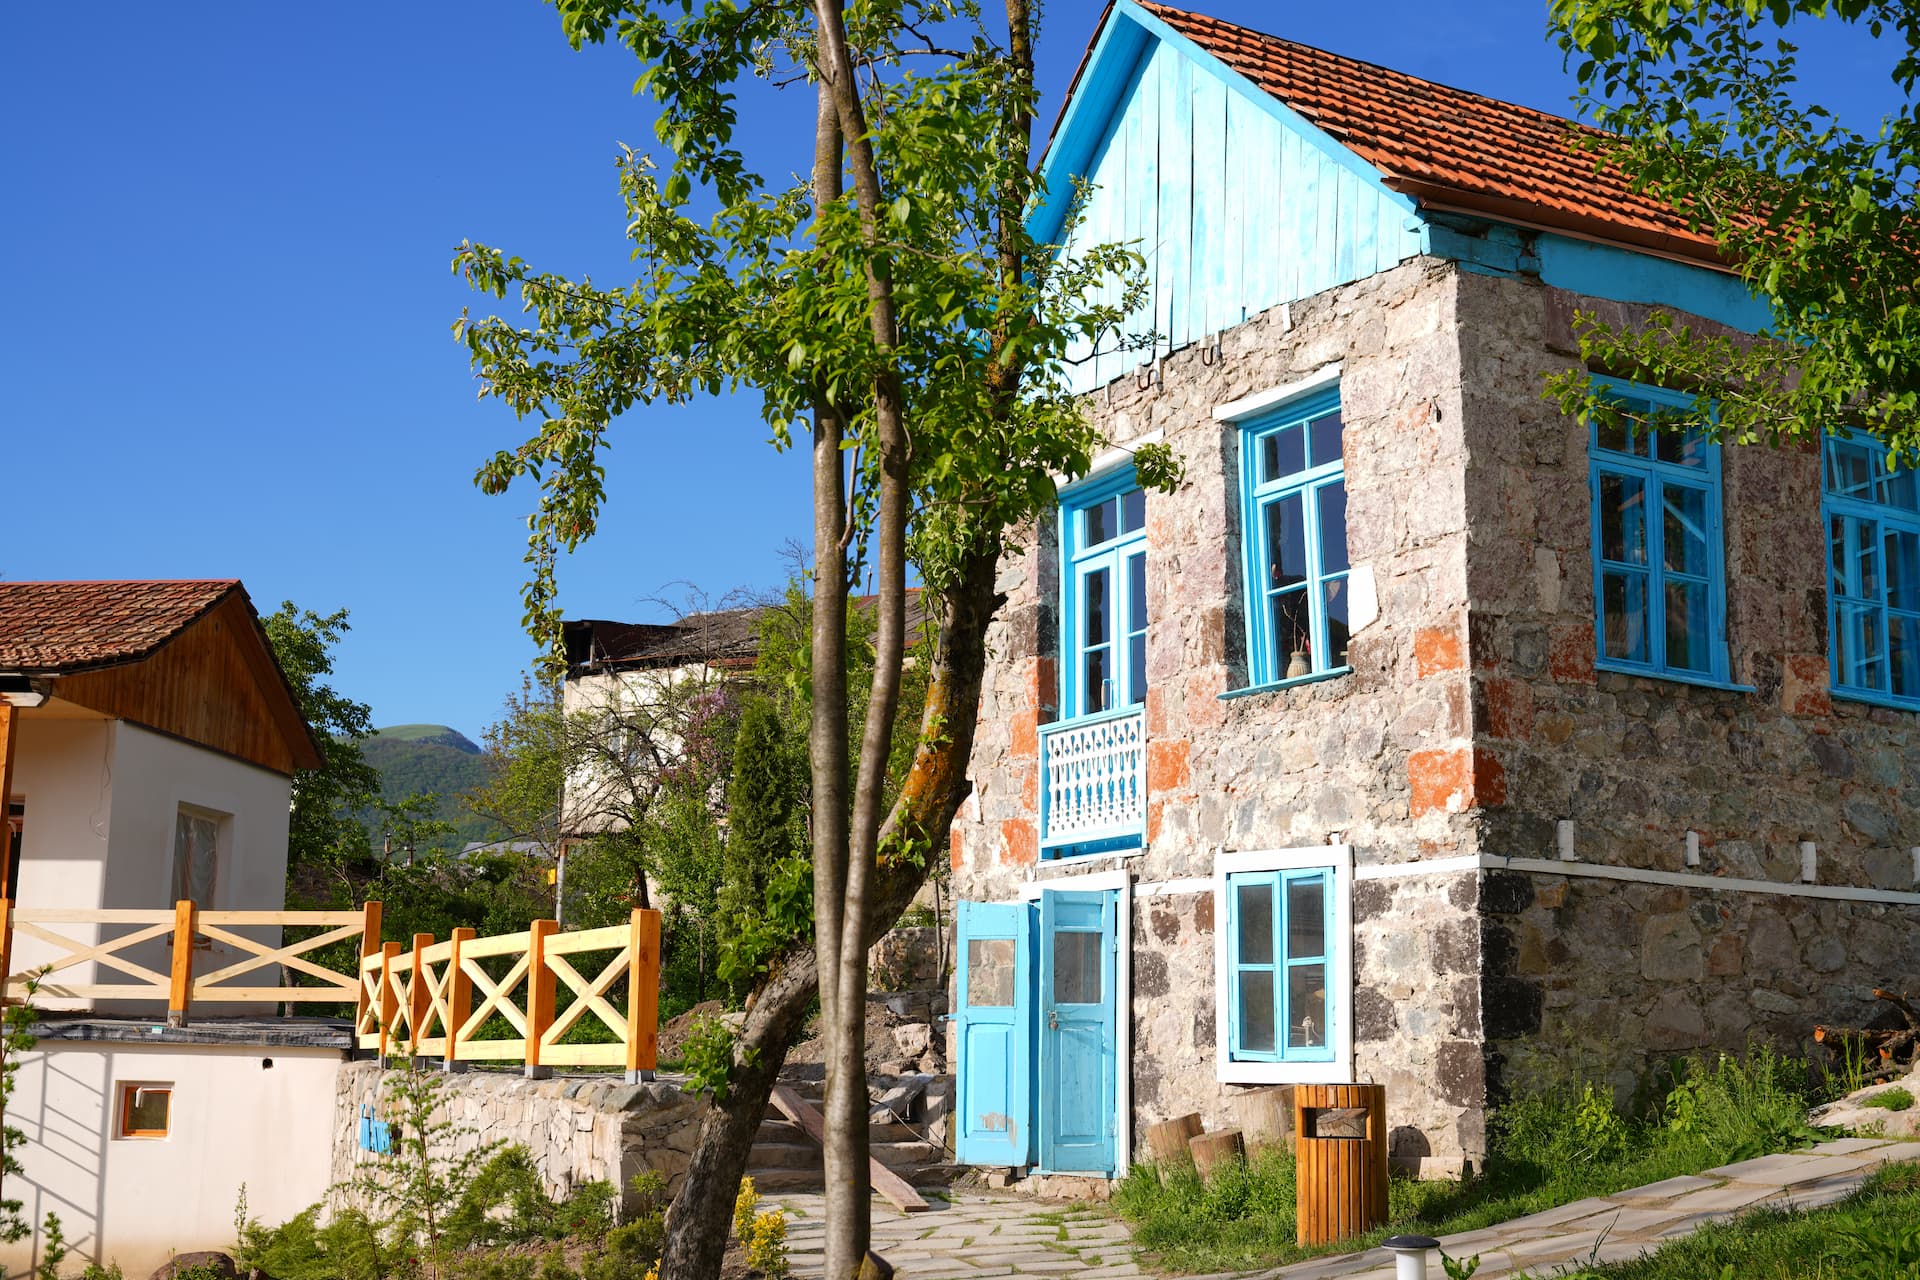 Toon Armeni, little village